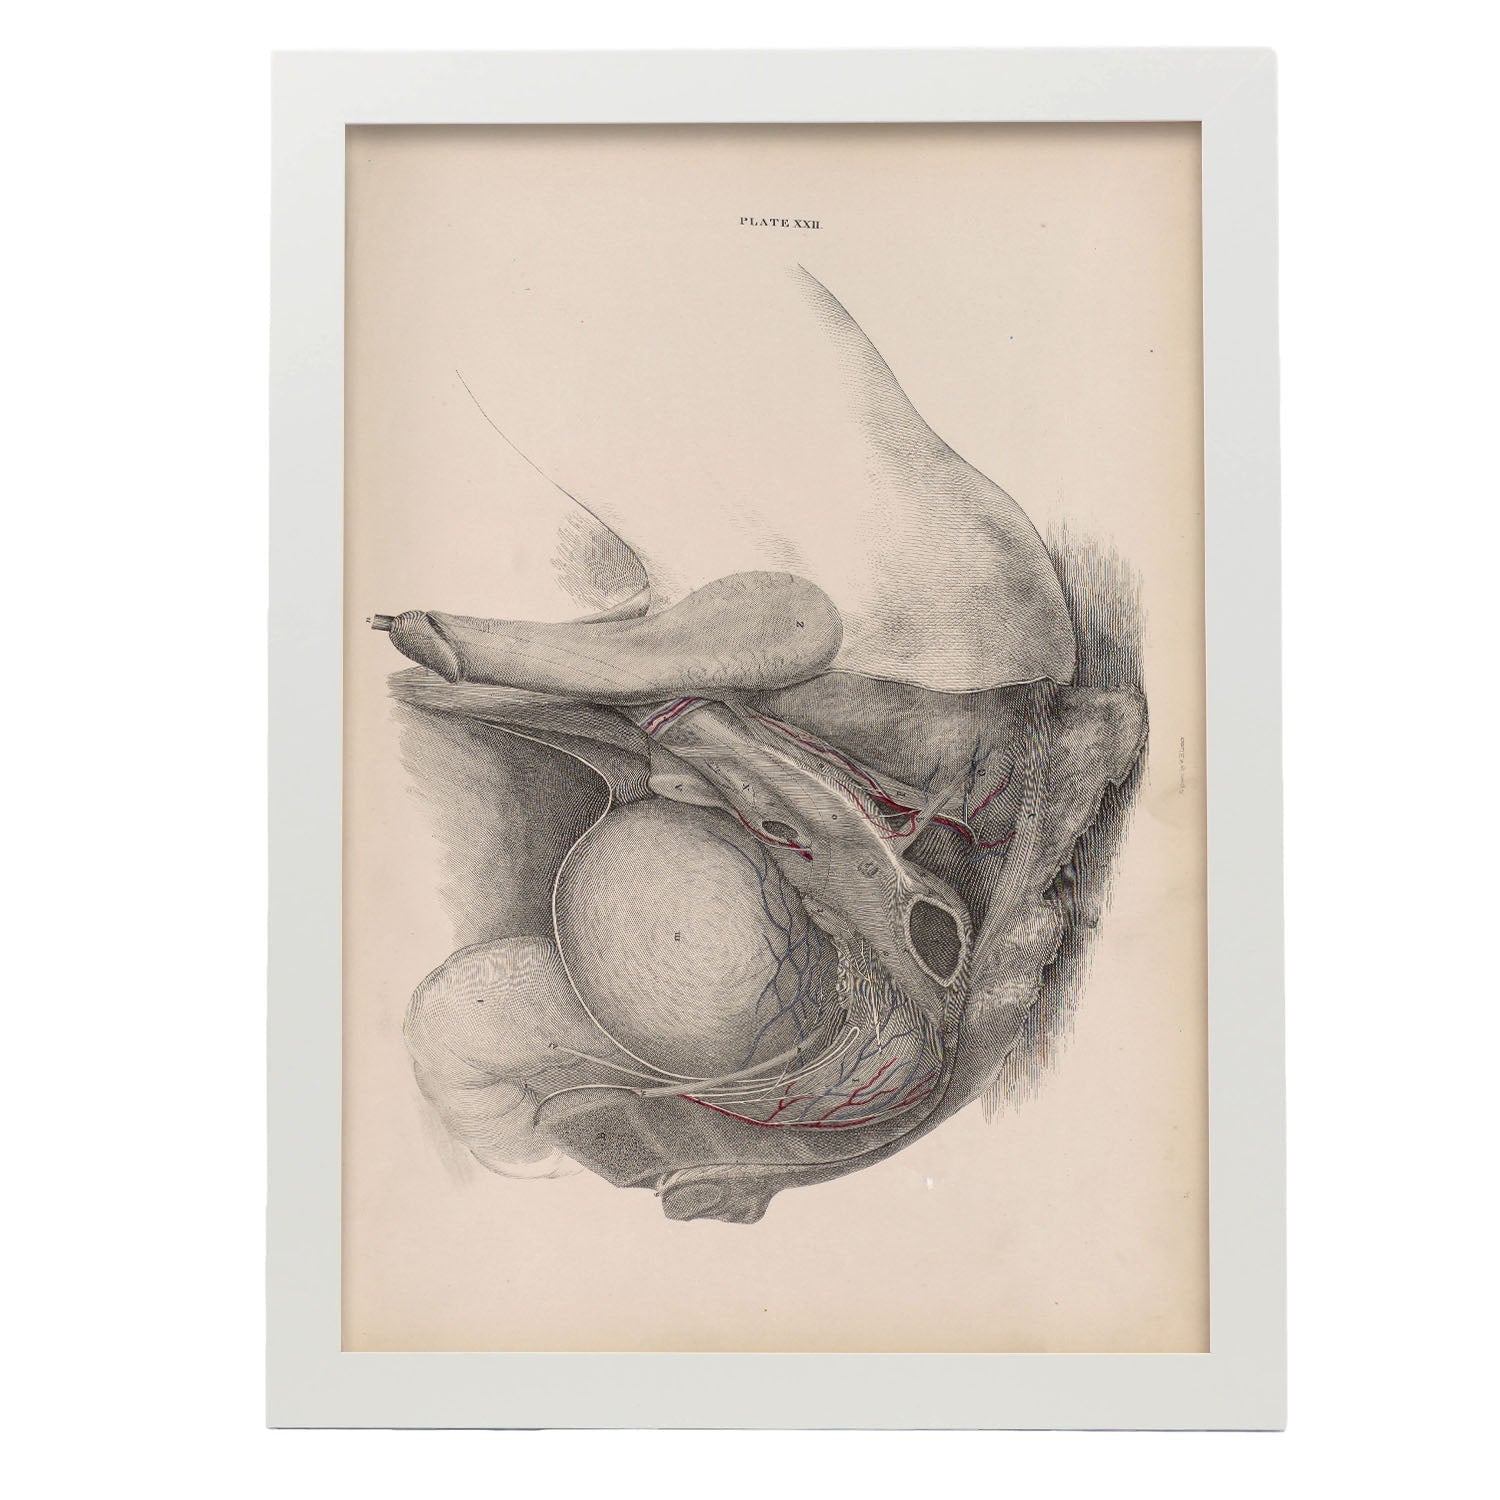 Dissection of the pelvis, urogenital system, male-Artwork-Nacnic-A3-Marco Blanco-Nacnic Estudio SL